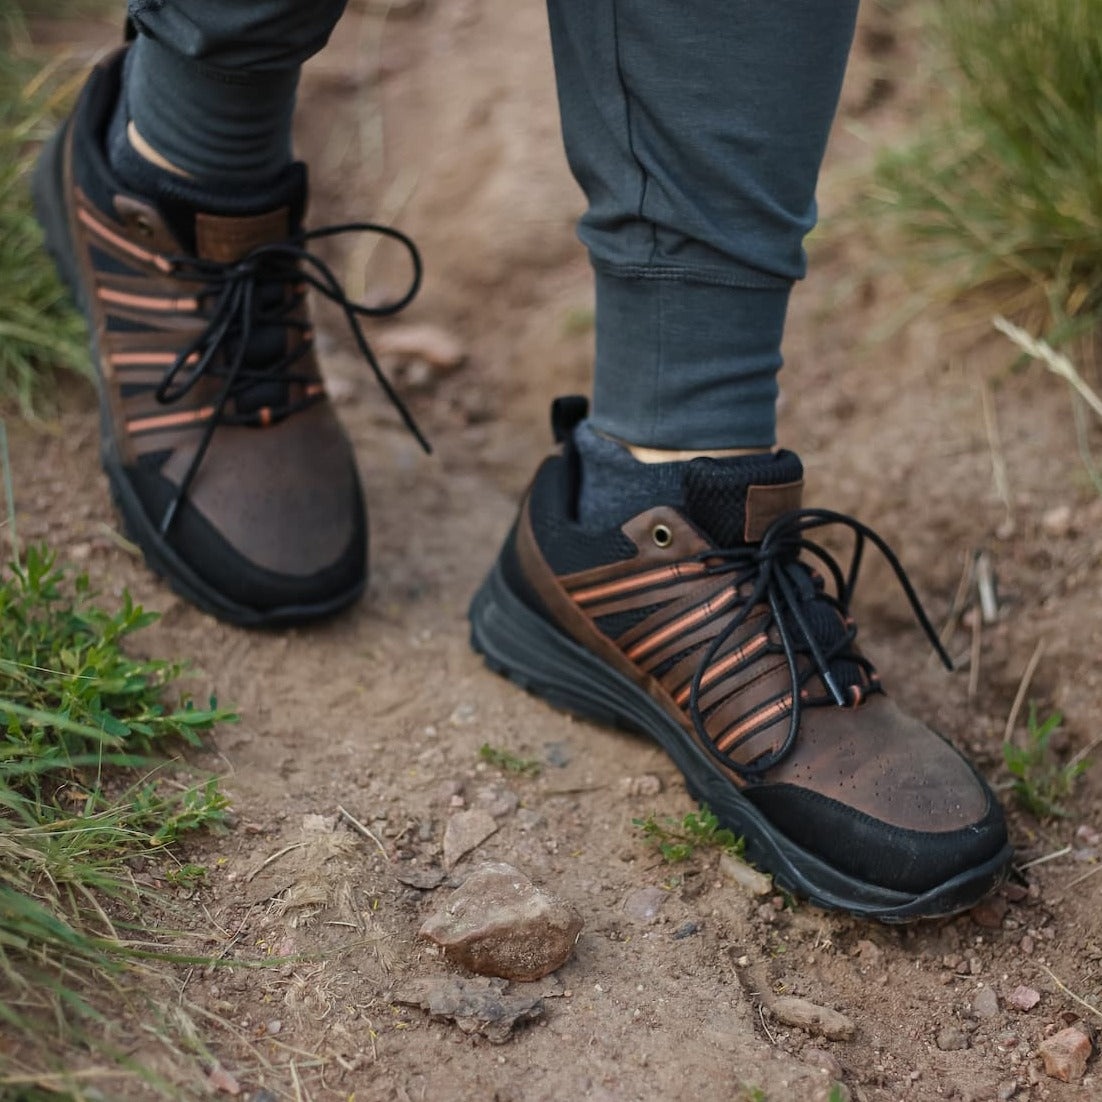 Trail Shoe • Jesse Brown Leather & Black Mesh